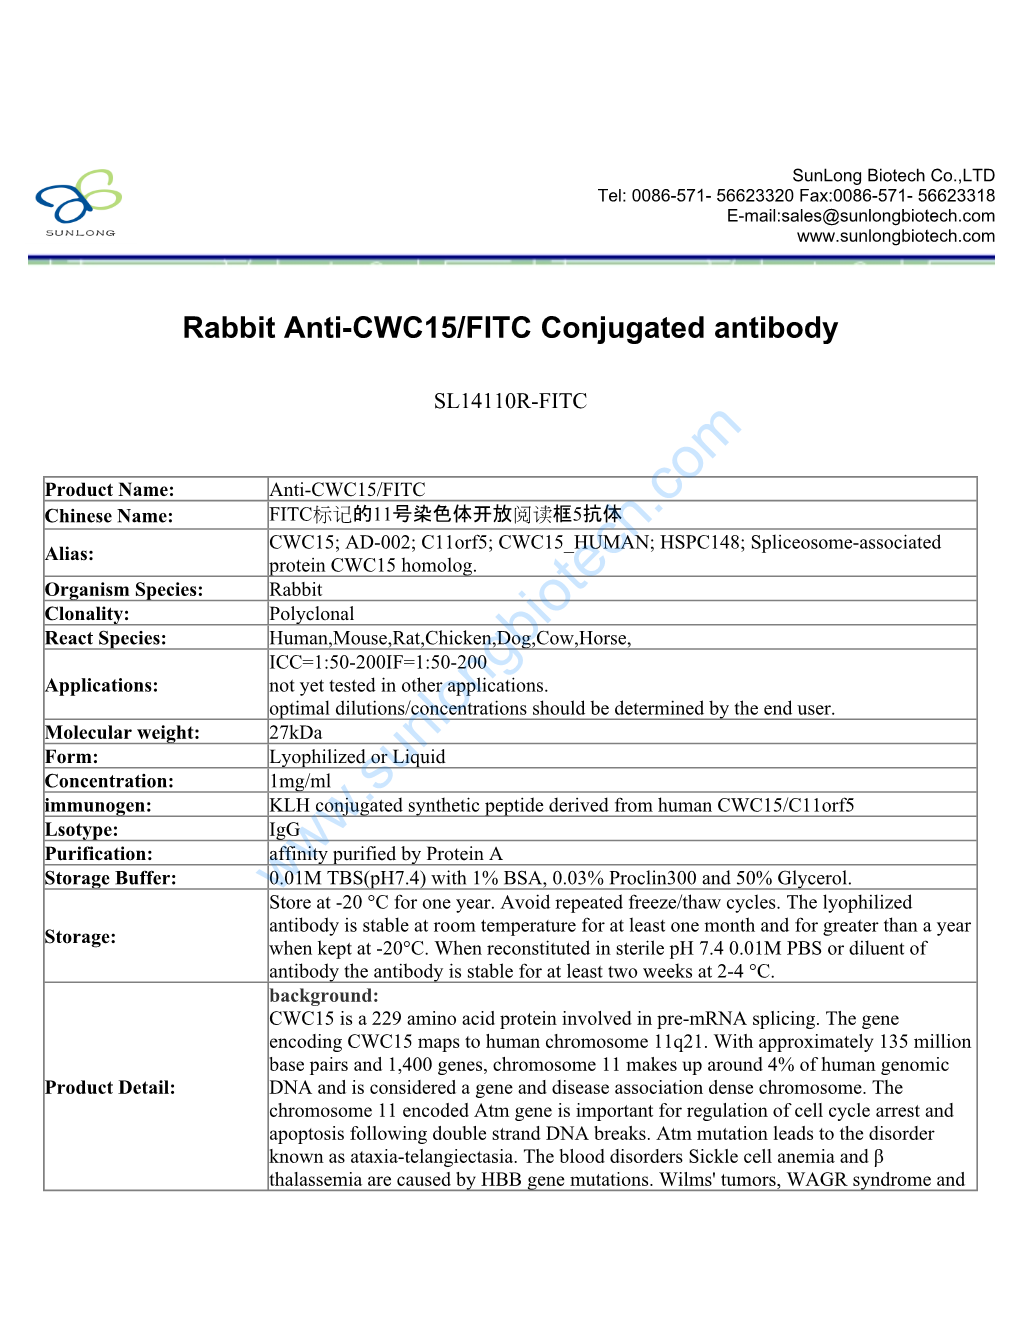 Rabbit Anti-CWC15/FITC Conjugated Antibody-SL14110R-FITC